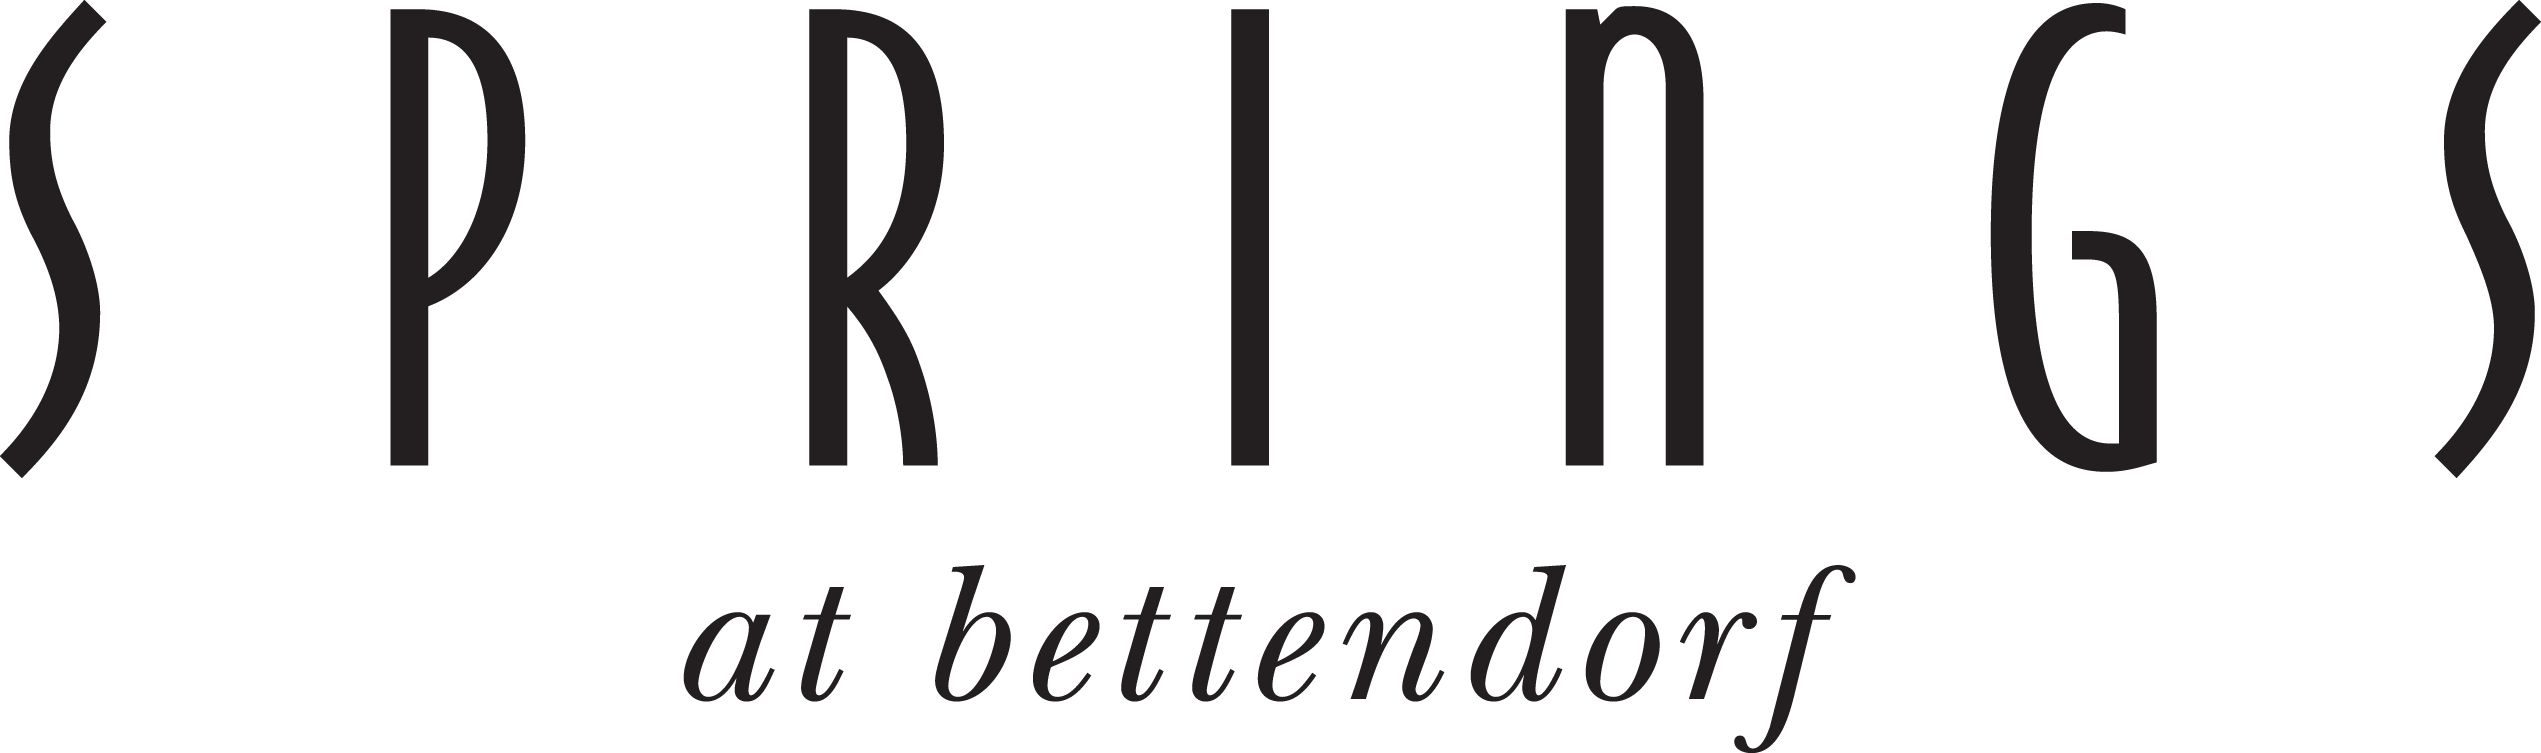 Black Bettendorf Logo